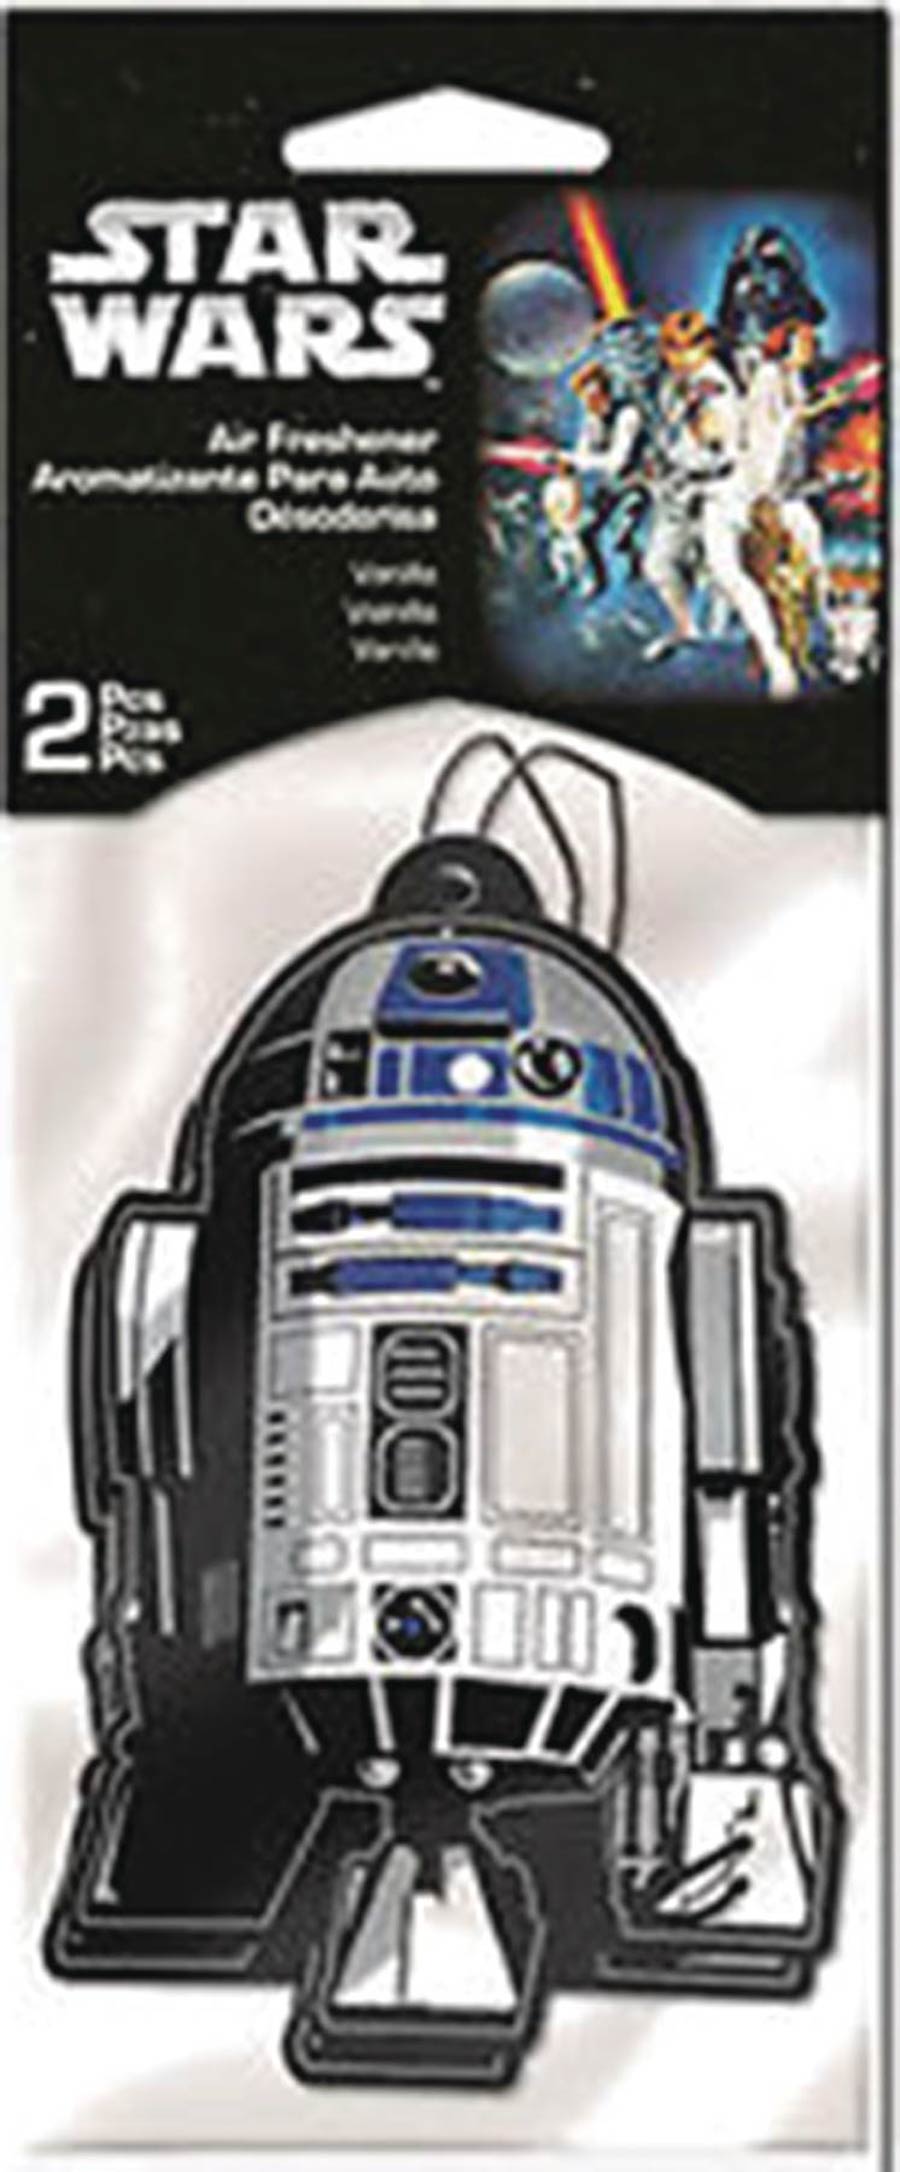 Star Wars Vanilla-Scented Air Freshener 2-Pack R2-D2 24-Piece Bag